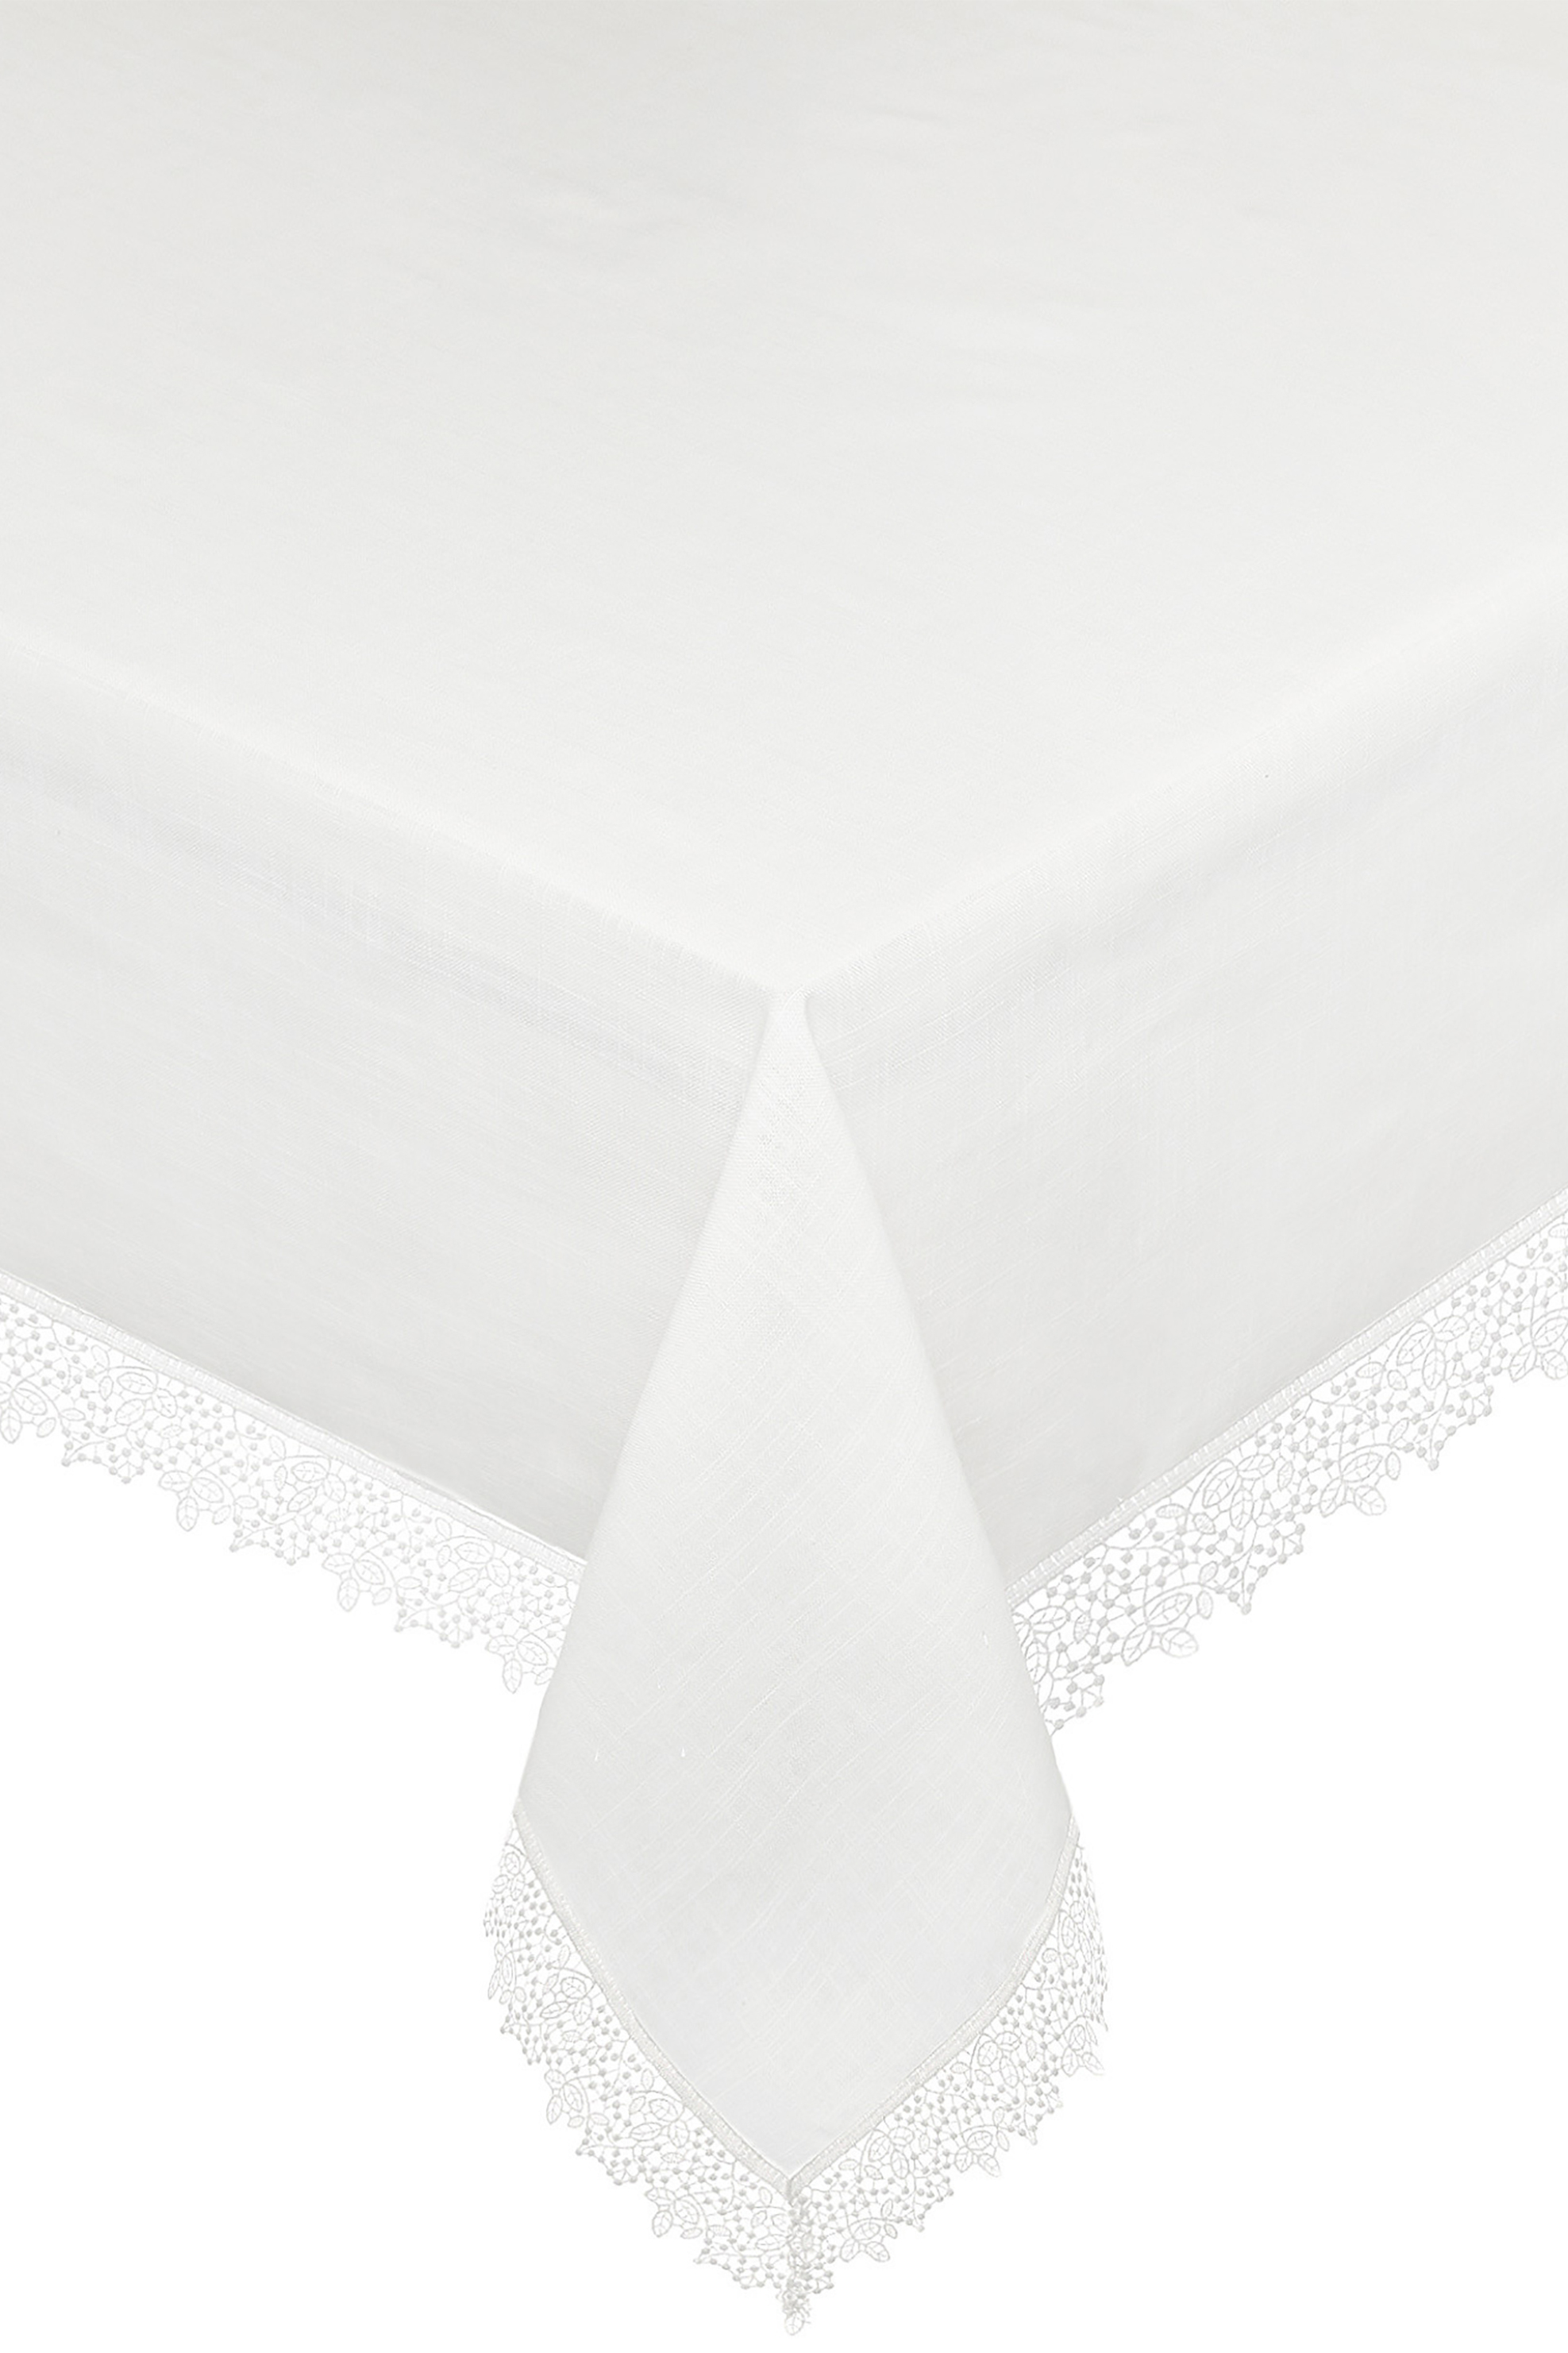 Home > ΚΟΥΖΙΝΑ > Τραπεζομάντηλα Coincasa τραπεζομάντηλο με δαντέλα στο τελείωμα 140 x 250 cm - 007152159 Λευκό